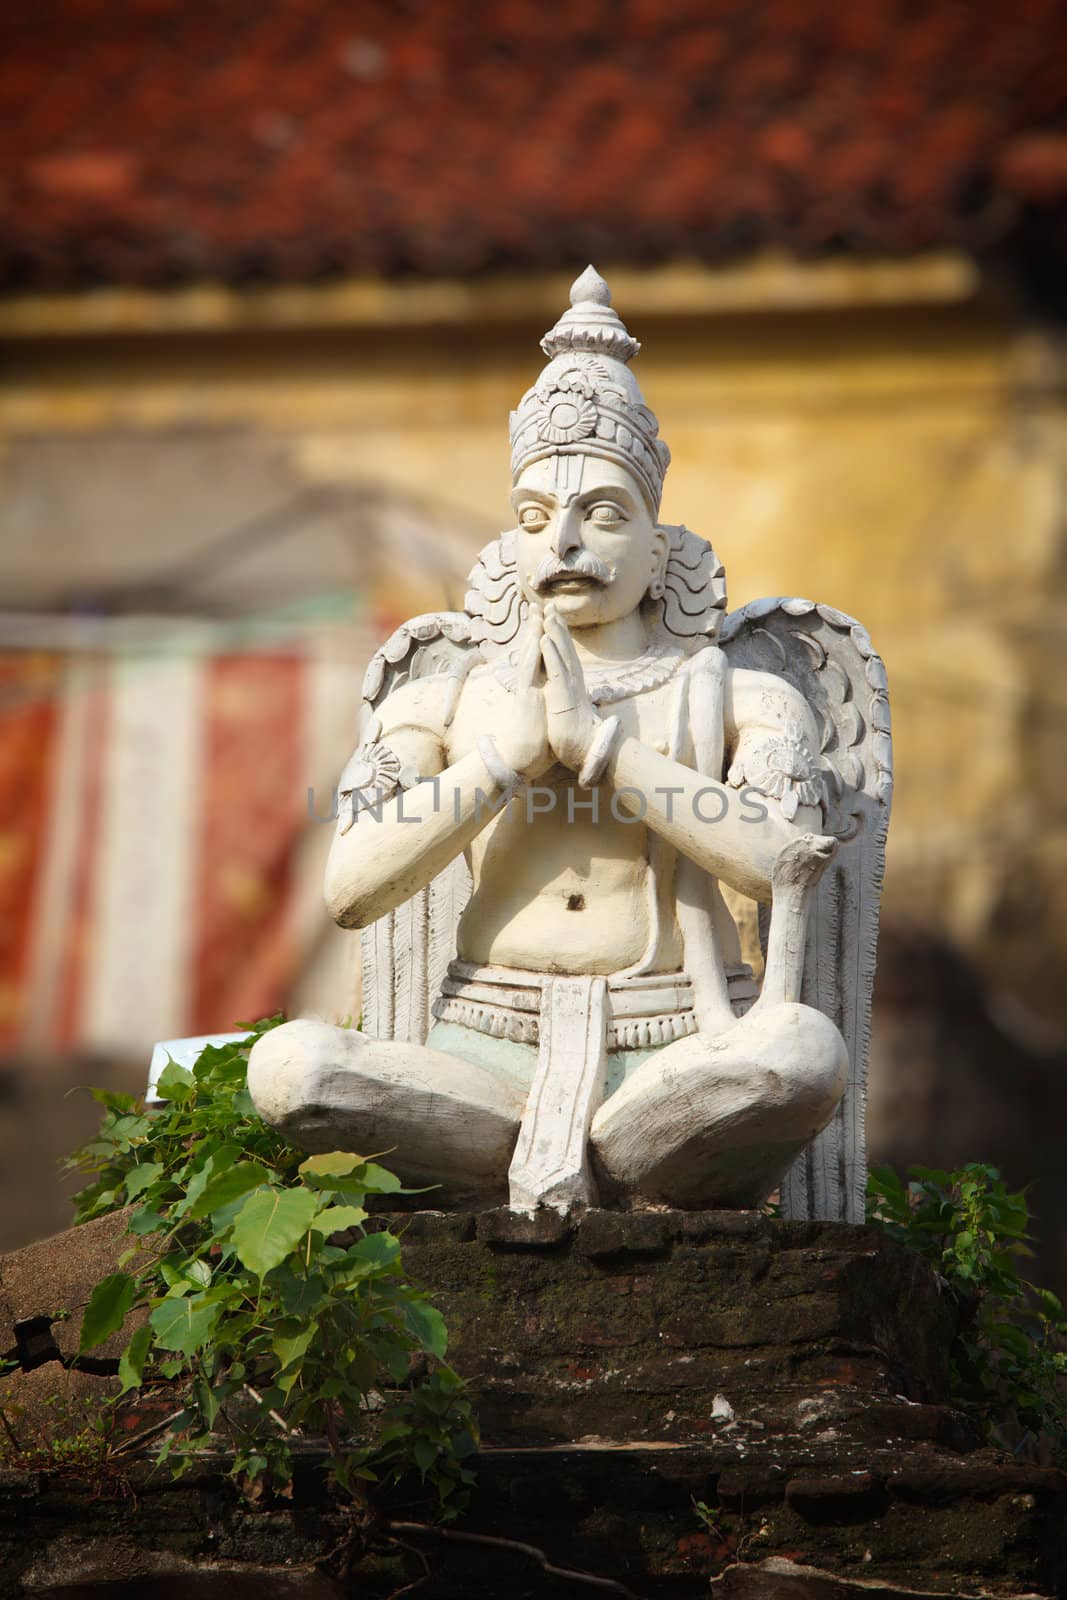 Garuda statue by dimol